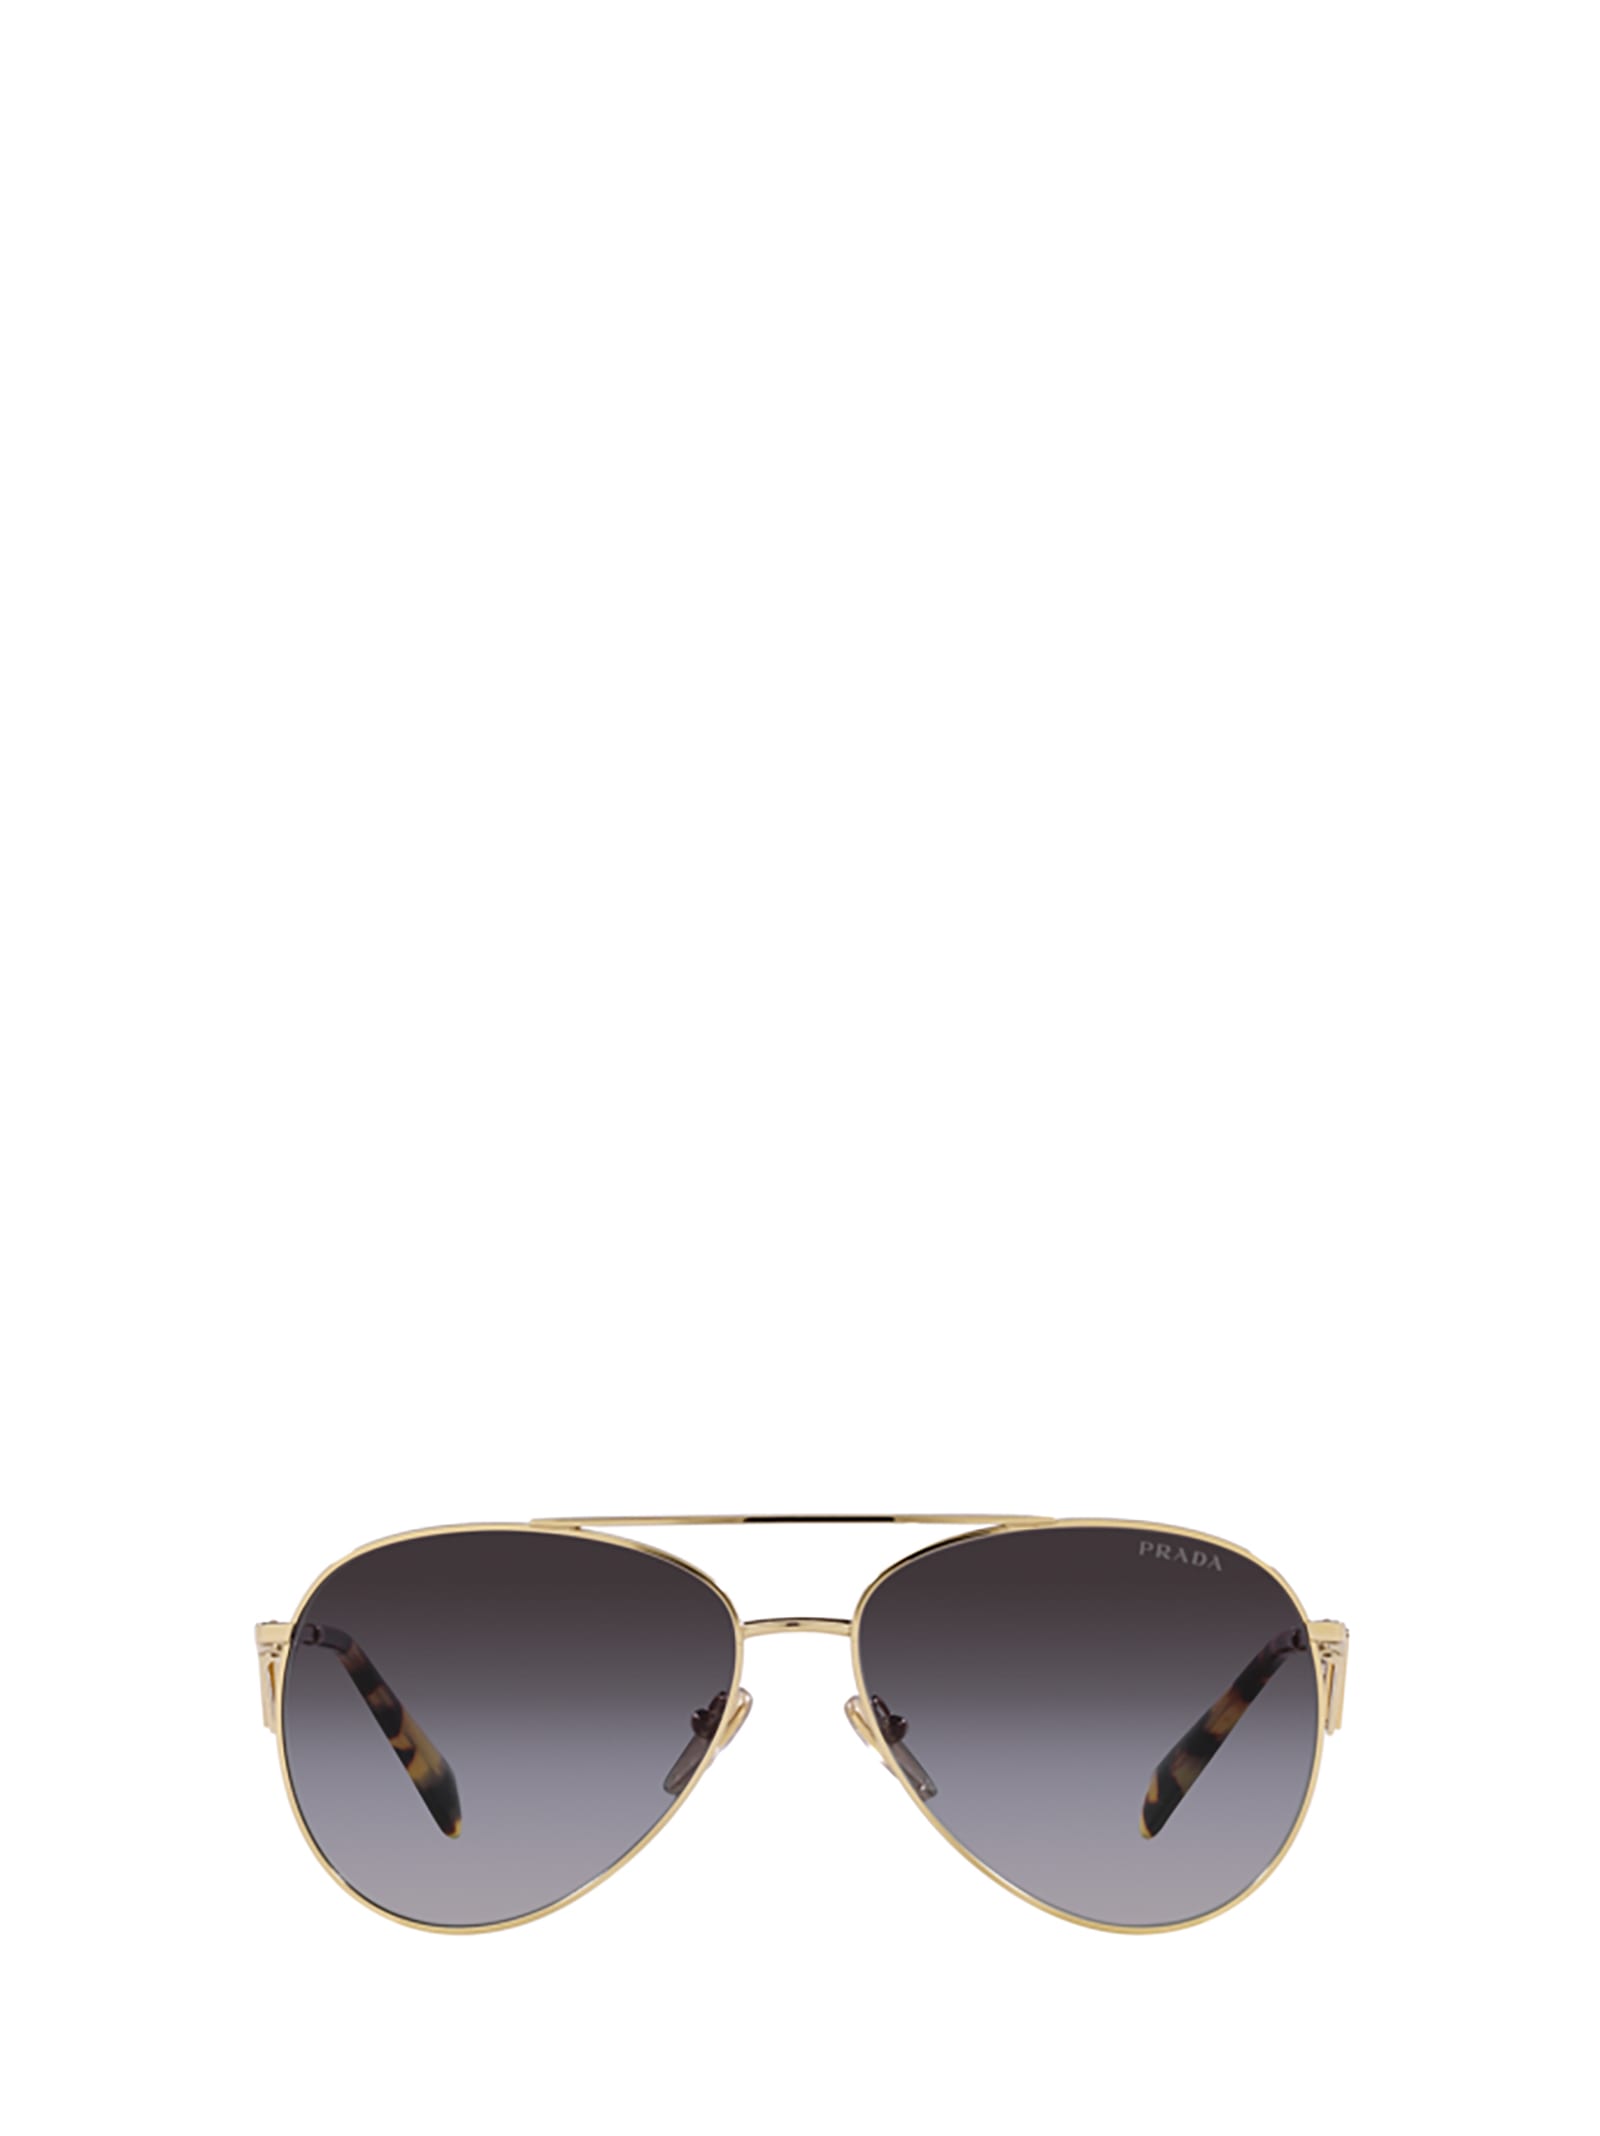 Prada Pr 73zs Pale Gold Sunglasses